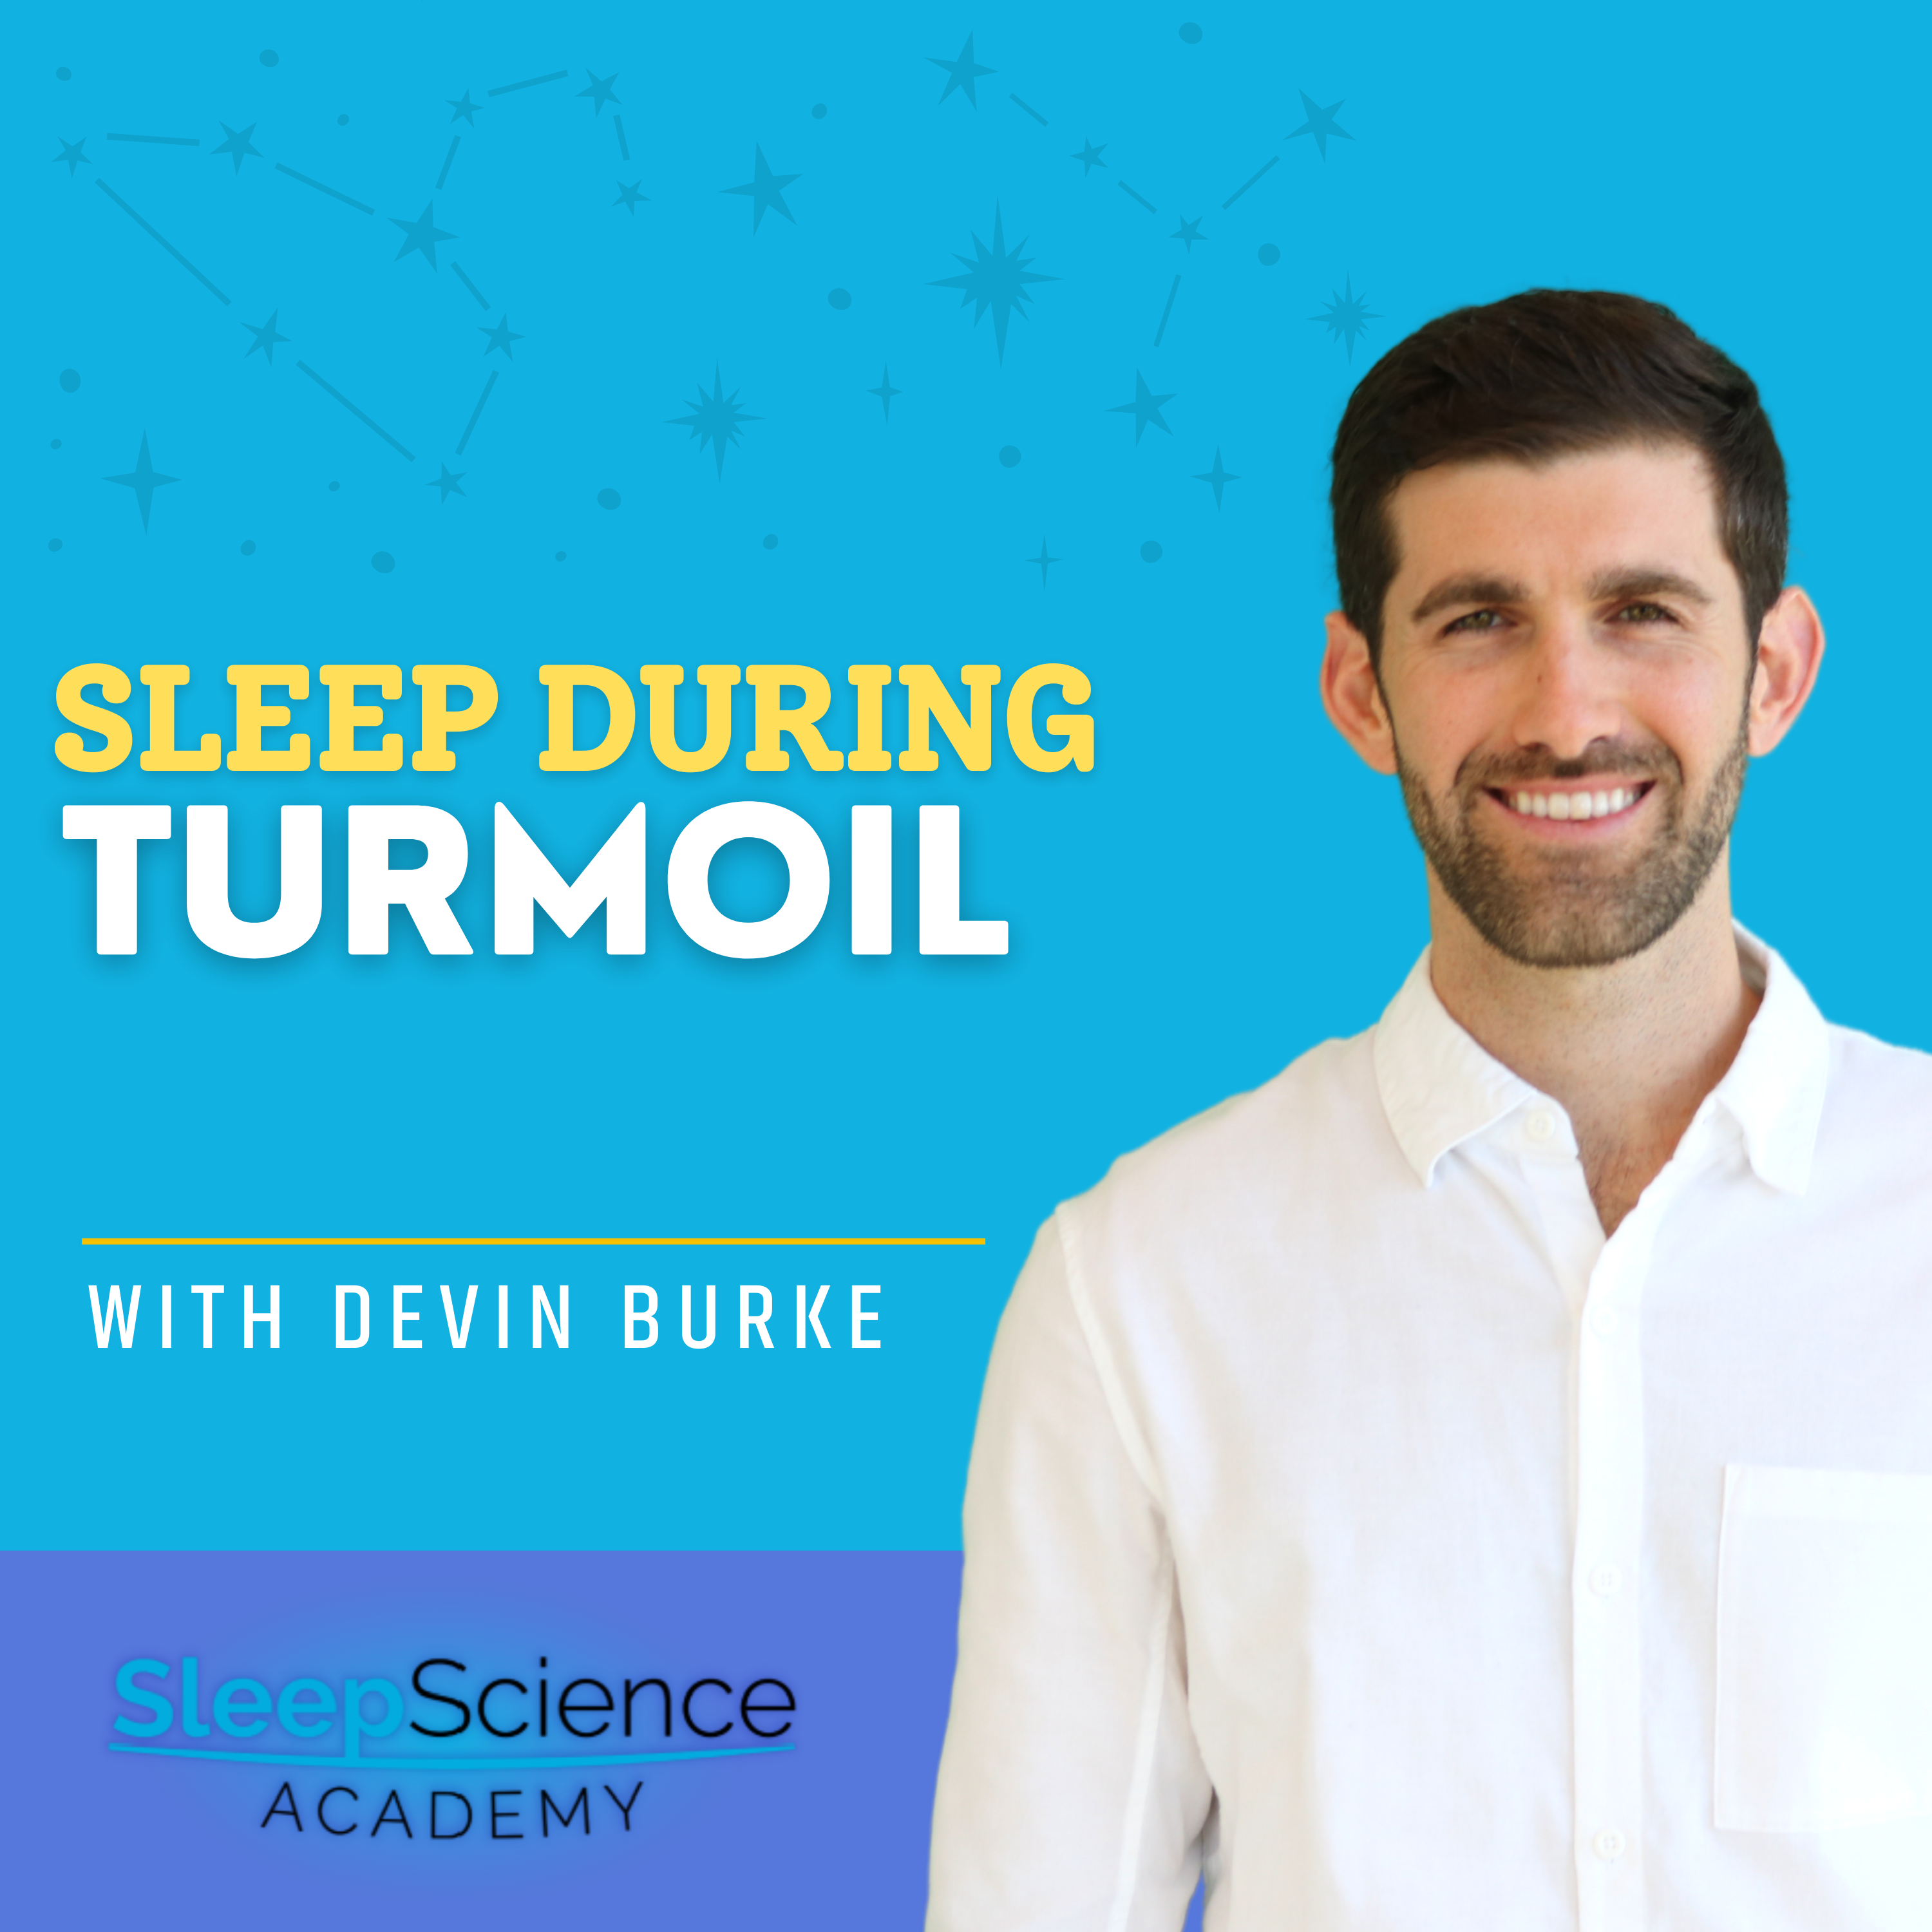 How To Sleep During Turmoil